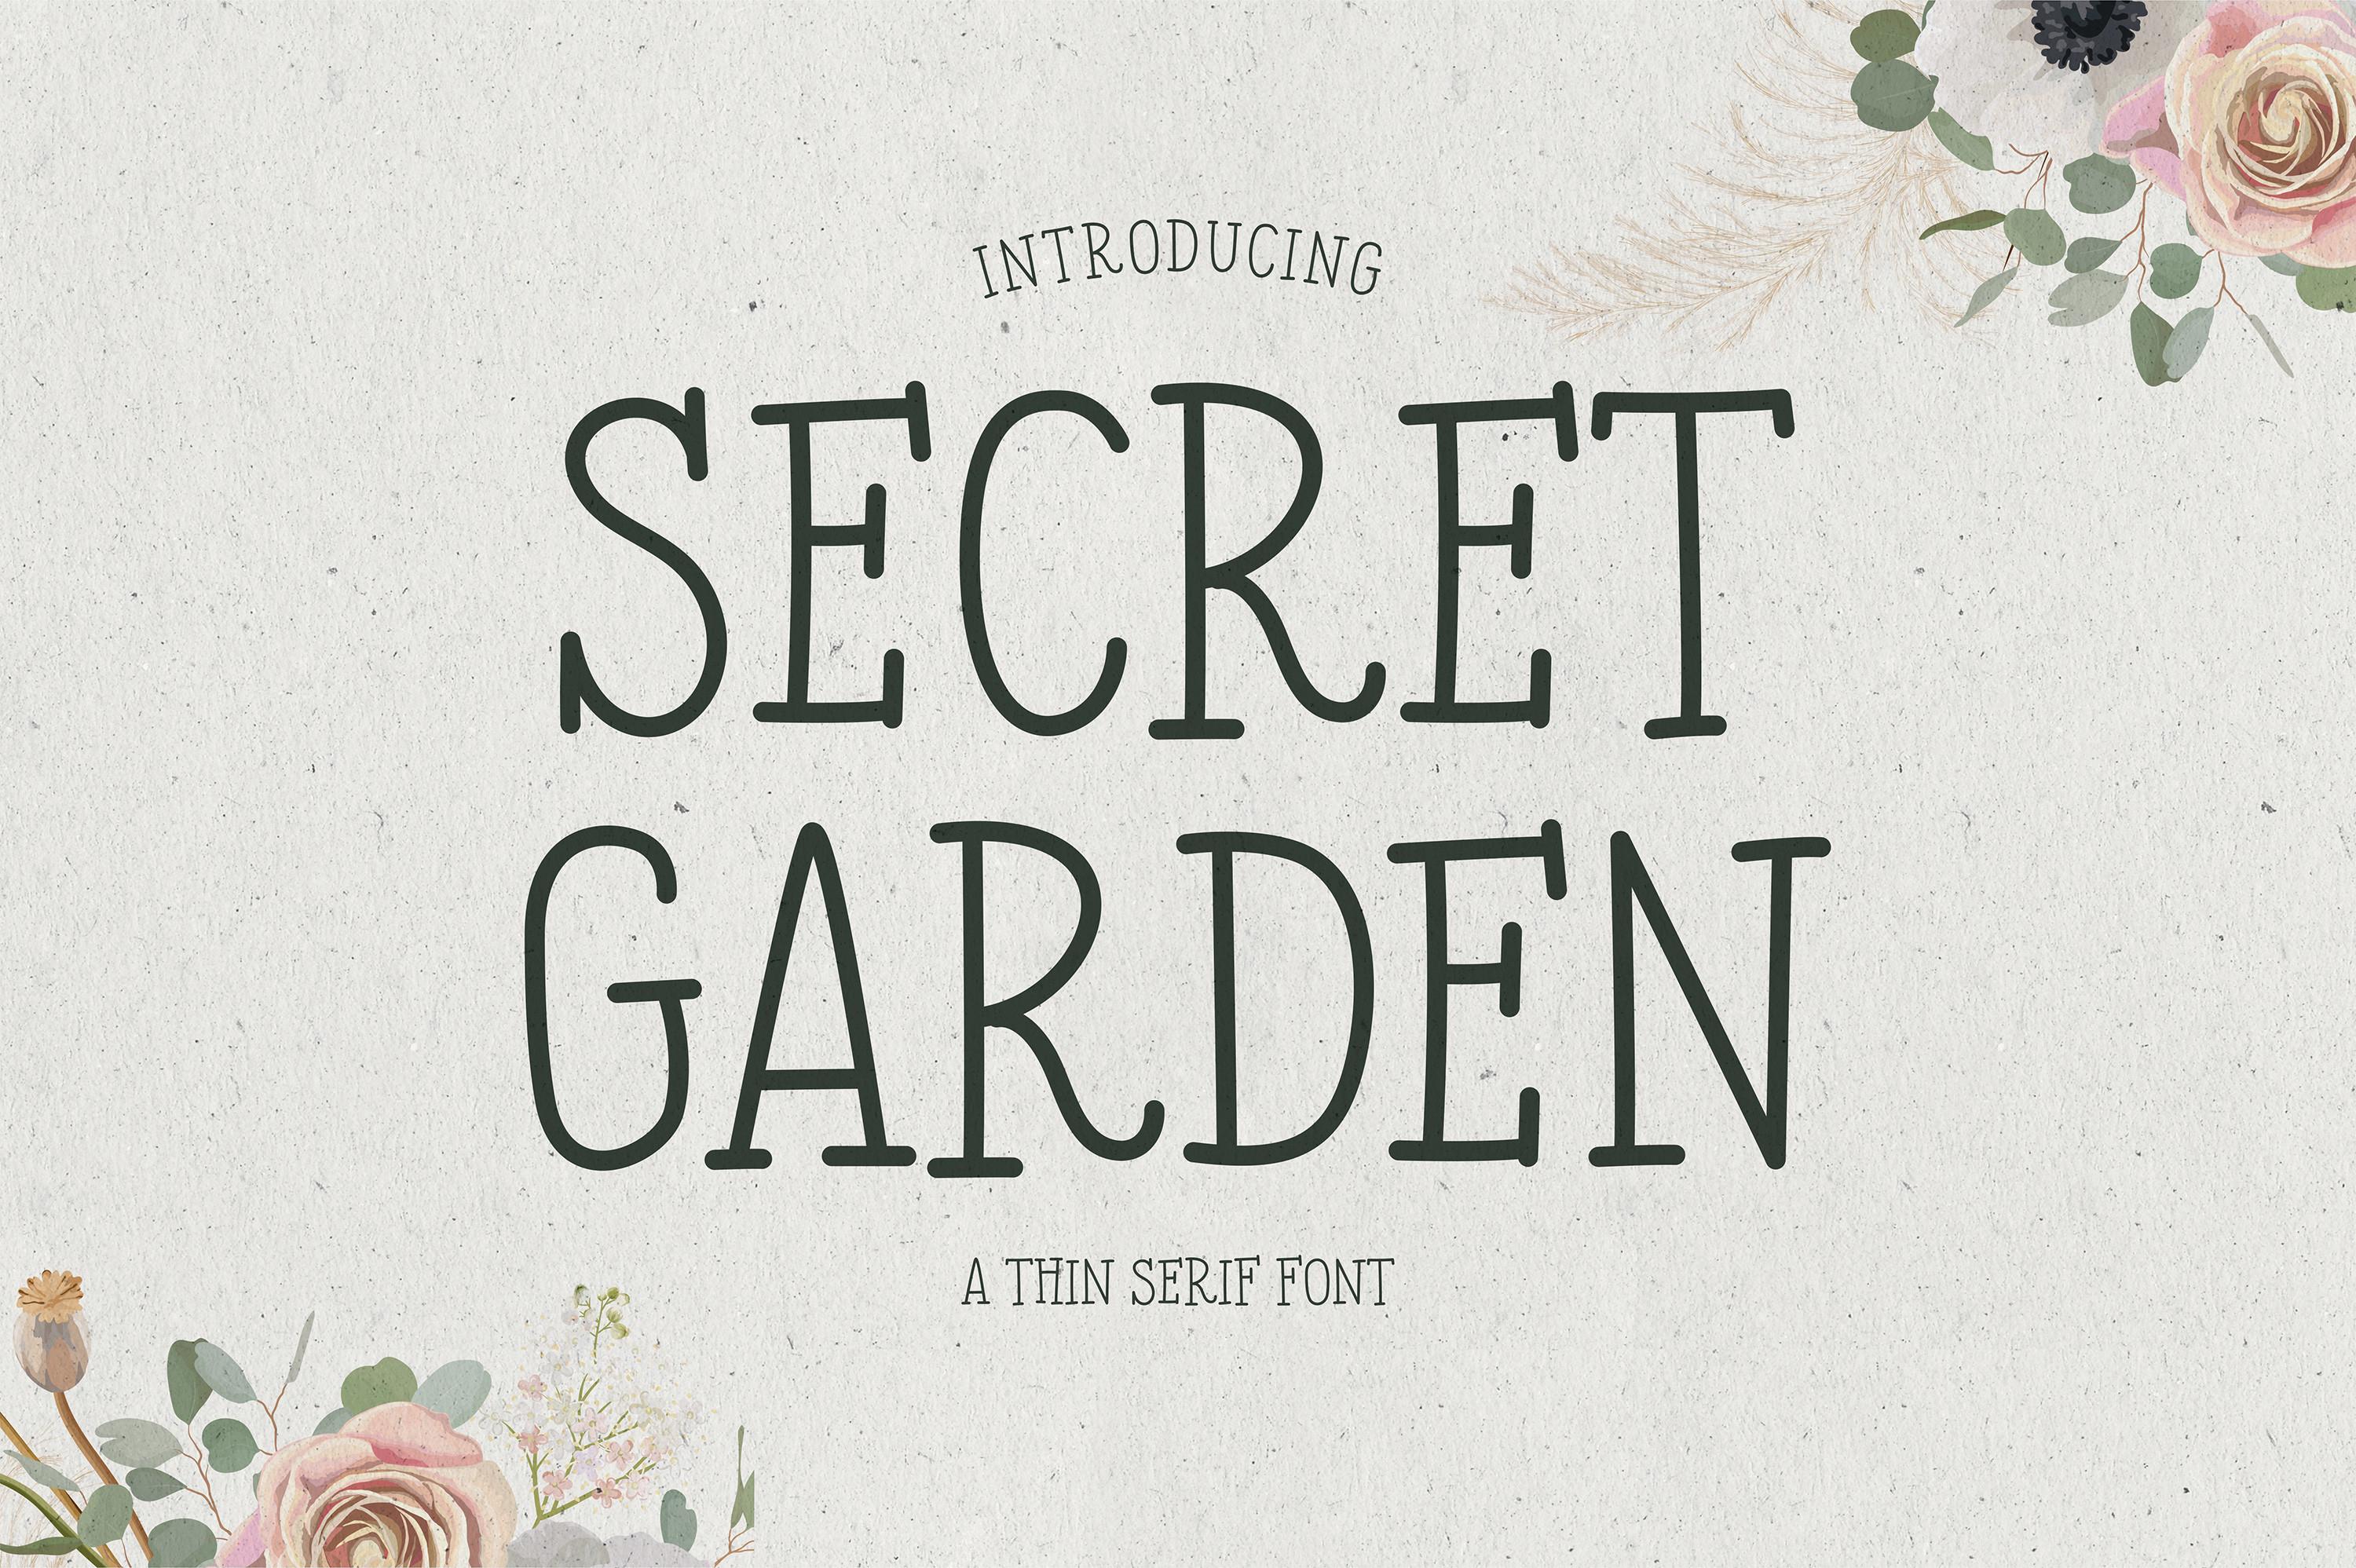 Secret Garden Font